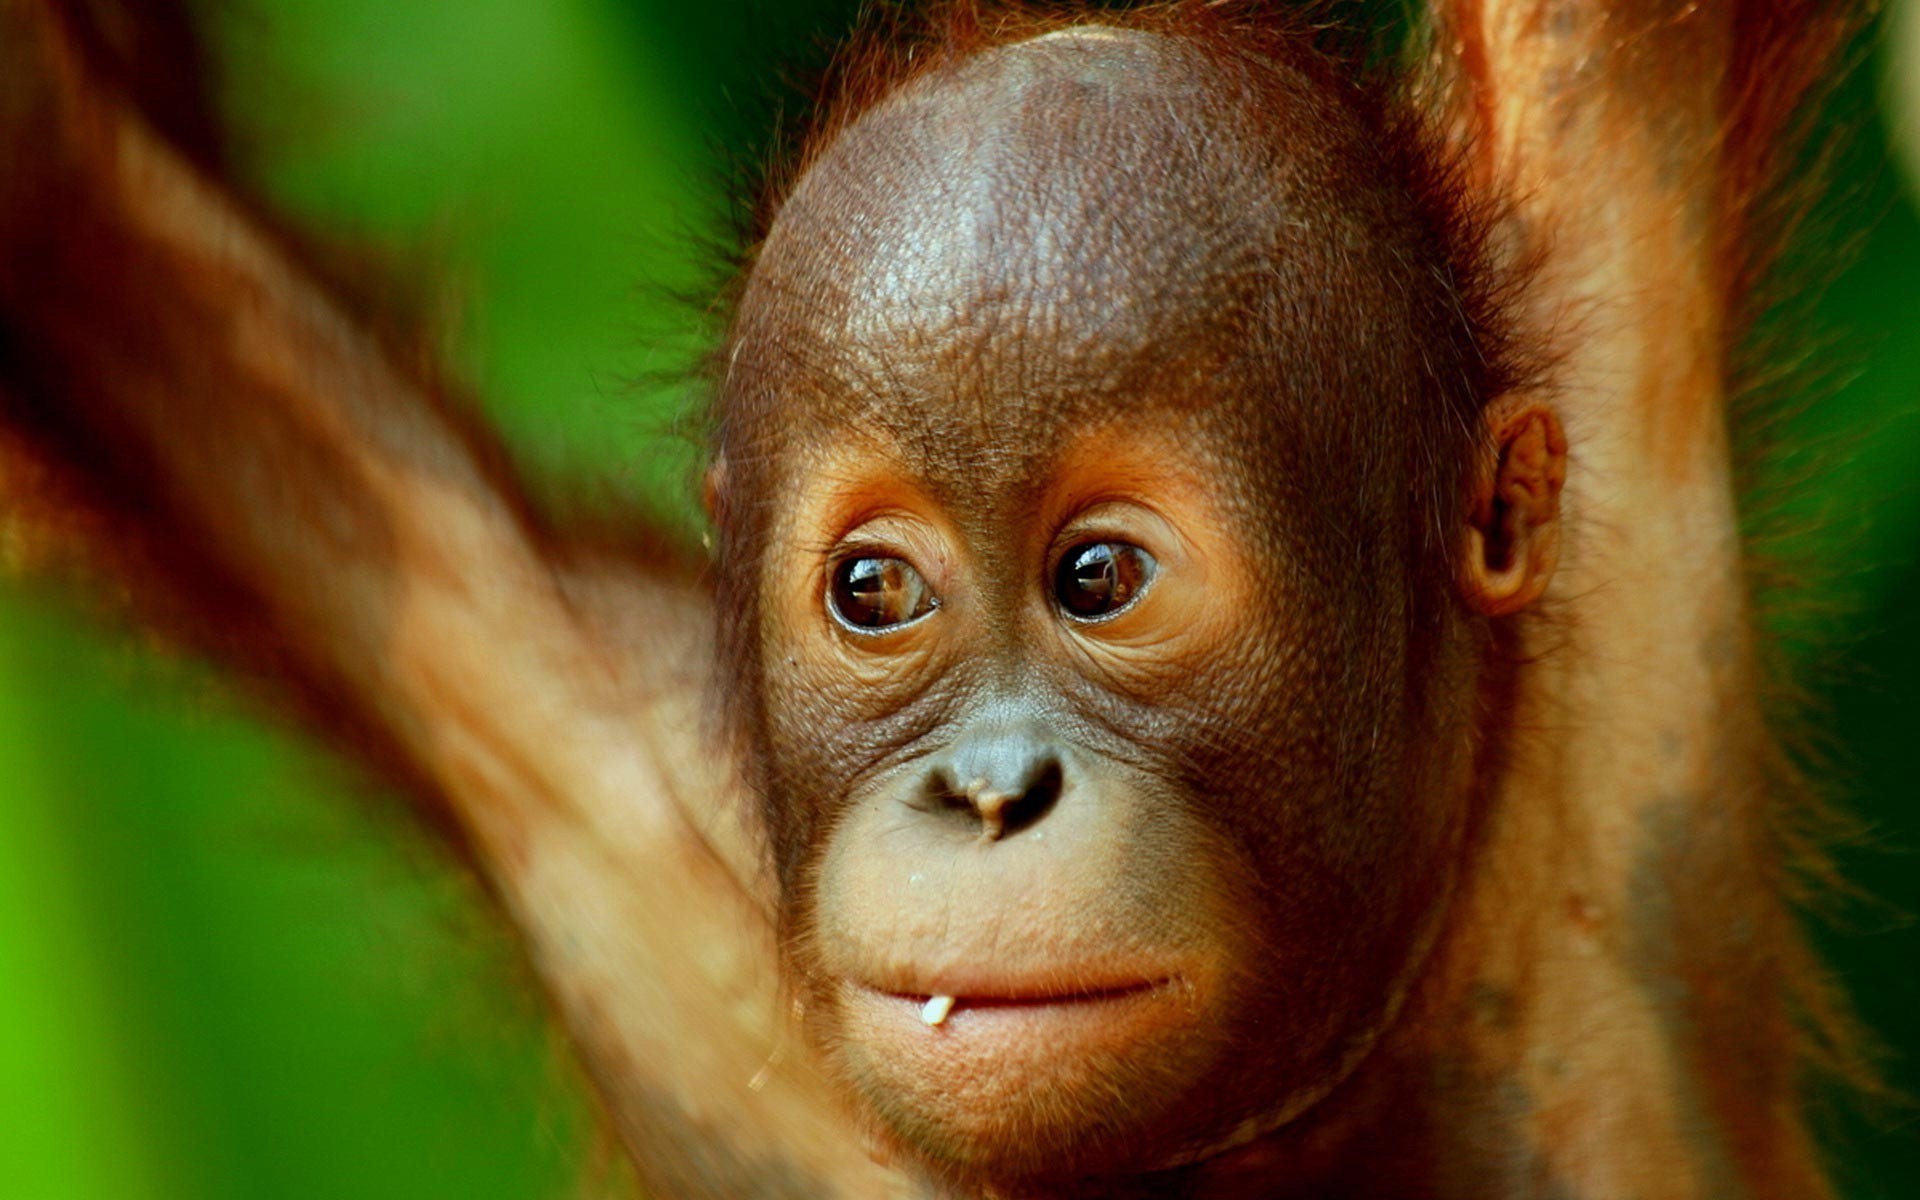 Baby Orangutan Cute Photos HD Wallpaper Image Pictures